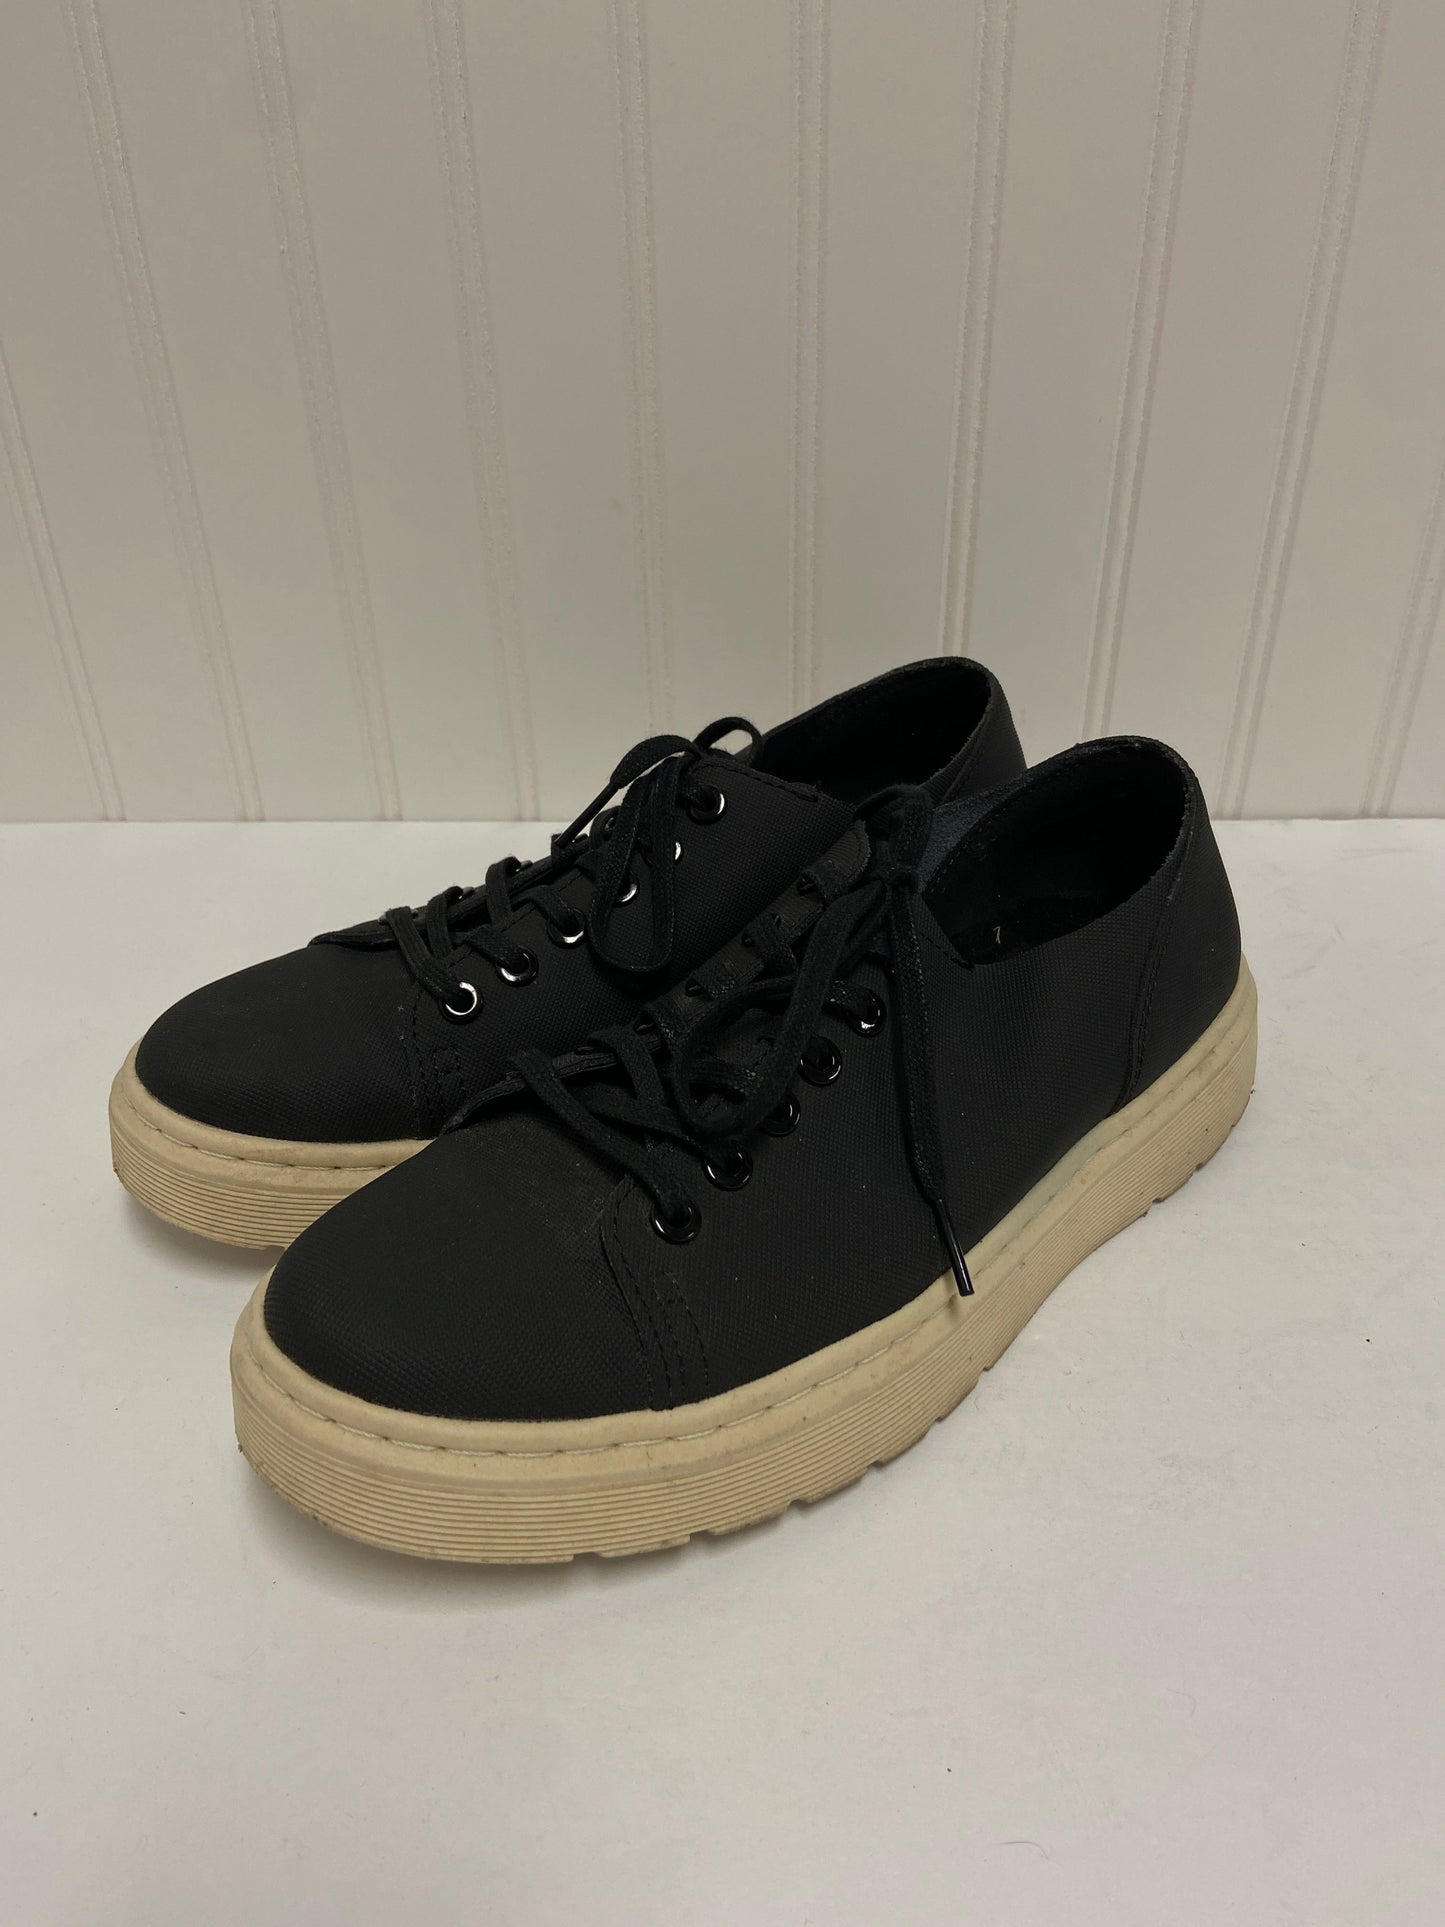 Black & Cream Shoes Sneakers Dr Martens, Size 7